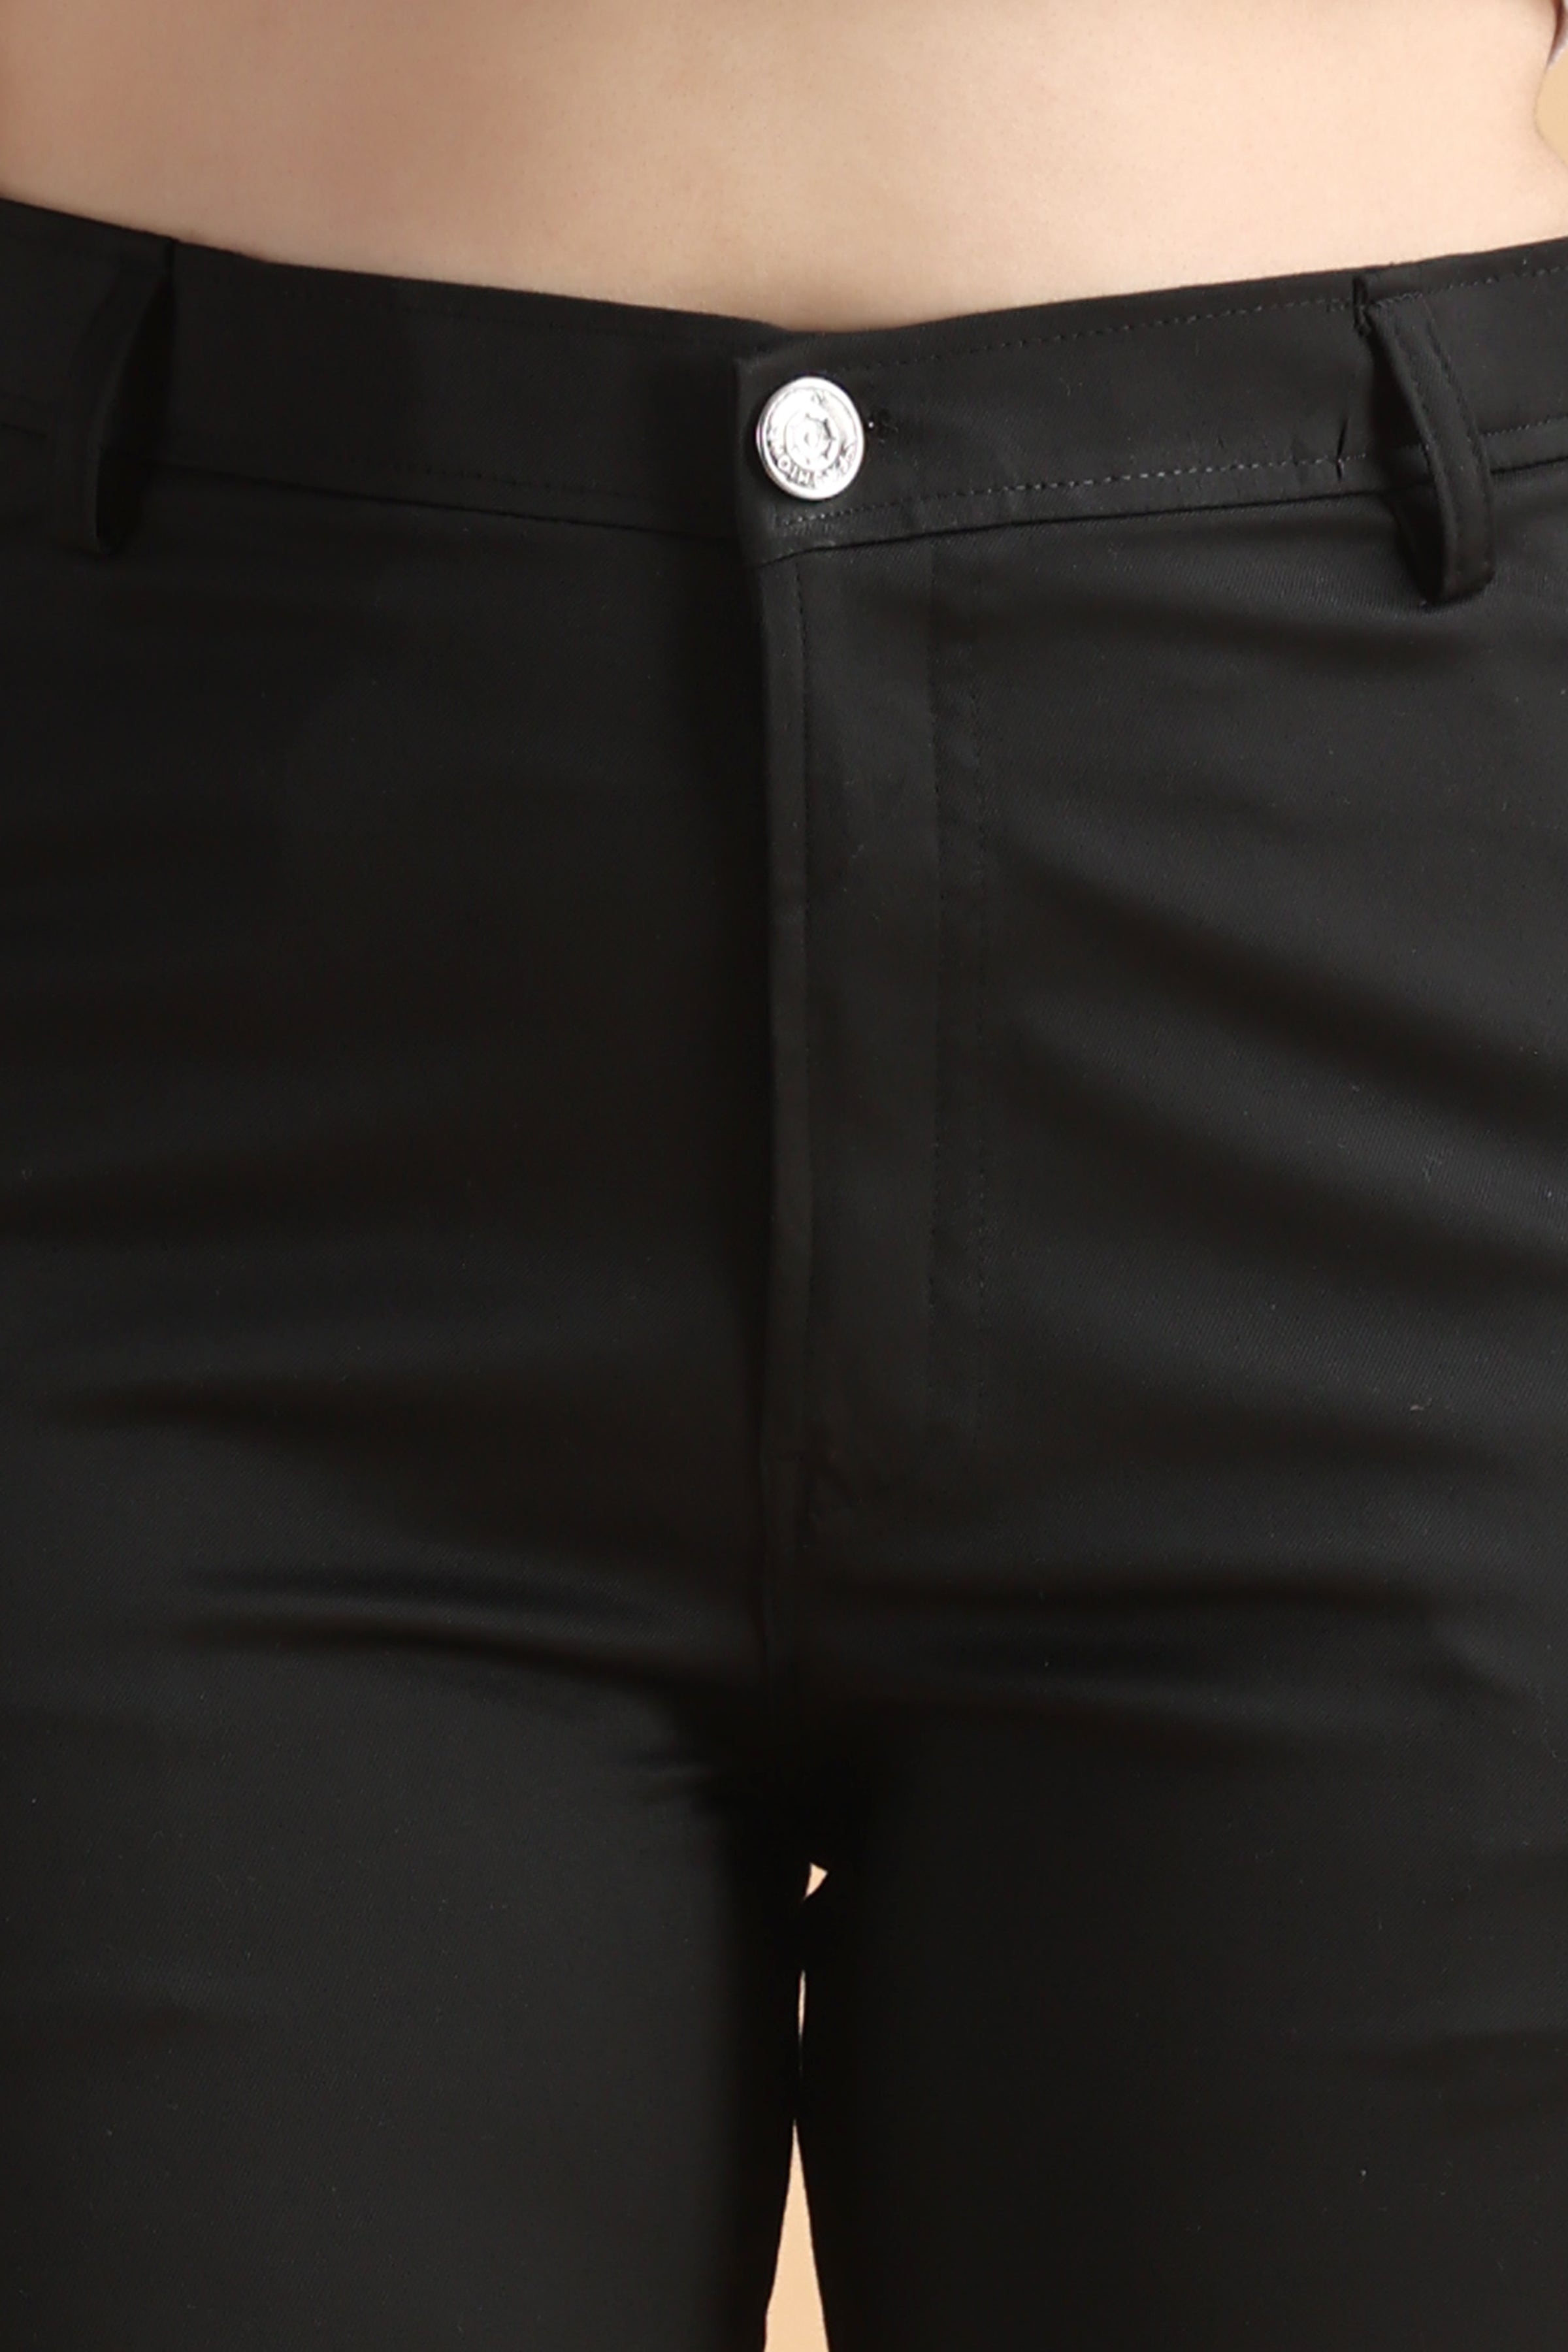 Buy Women Black Regular Fit Solid Casual Trousers Online  762870  Allen  Solly